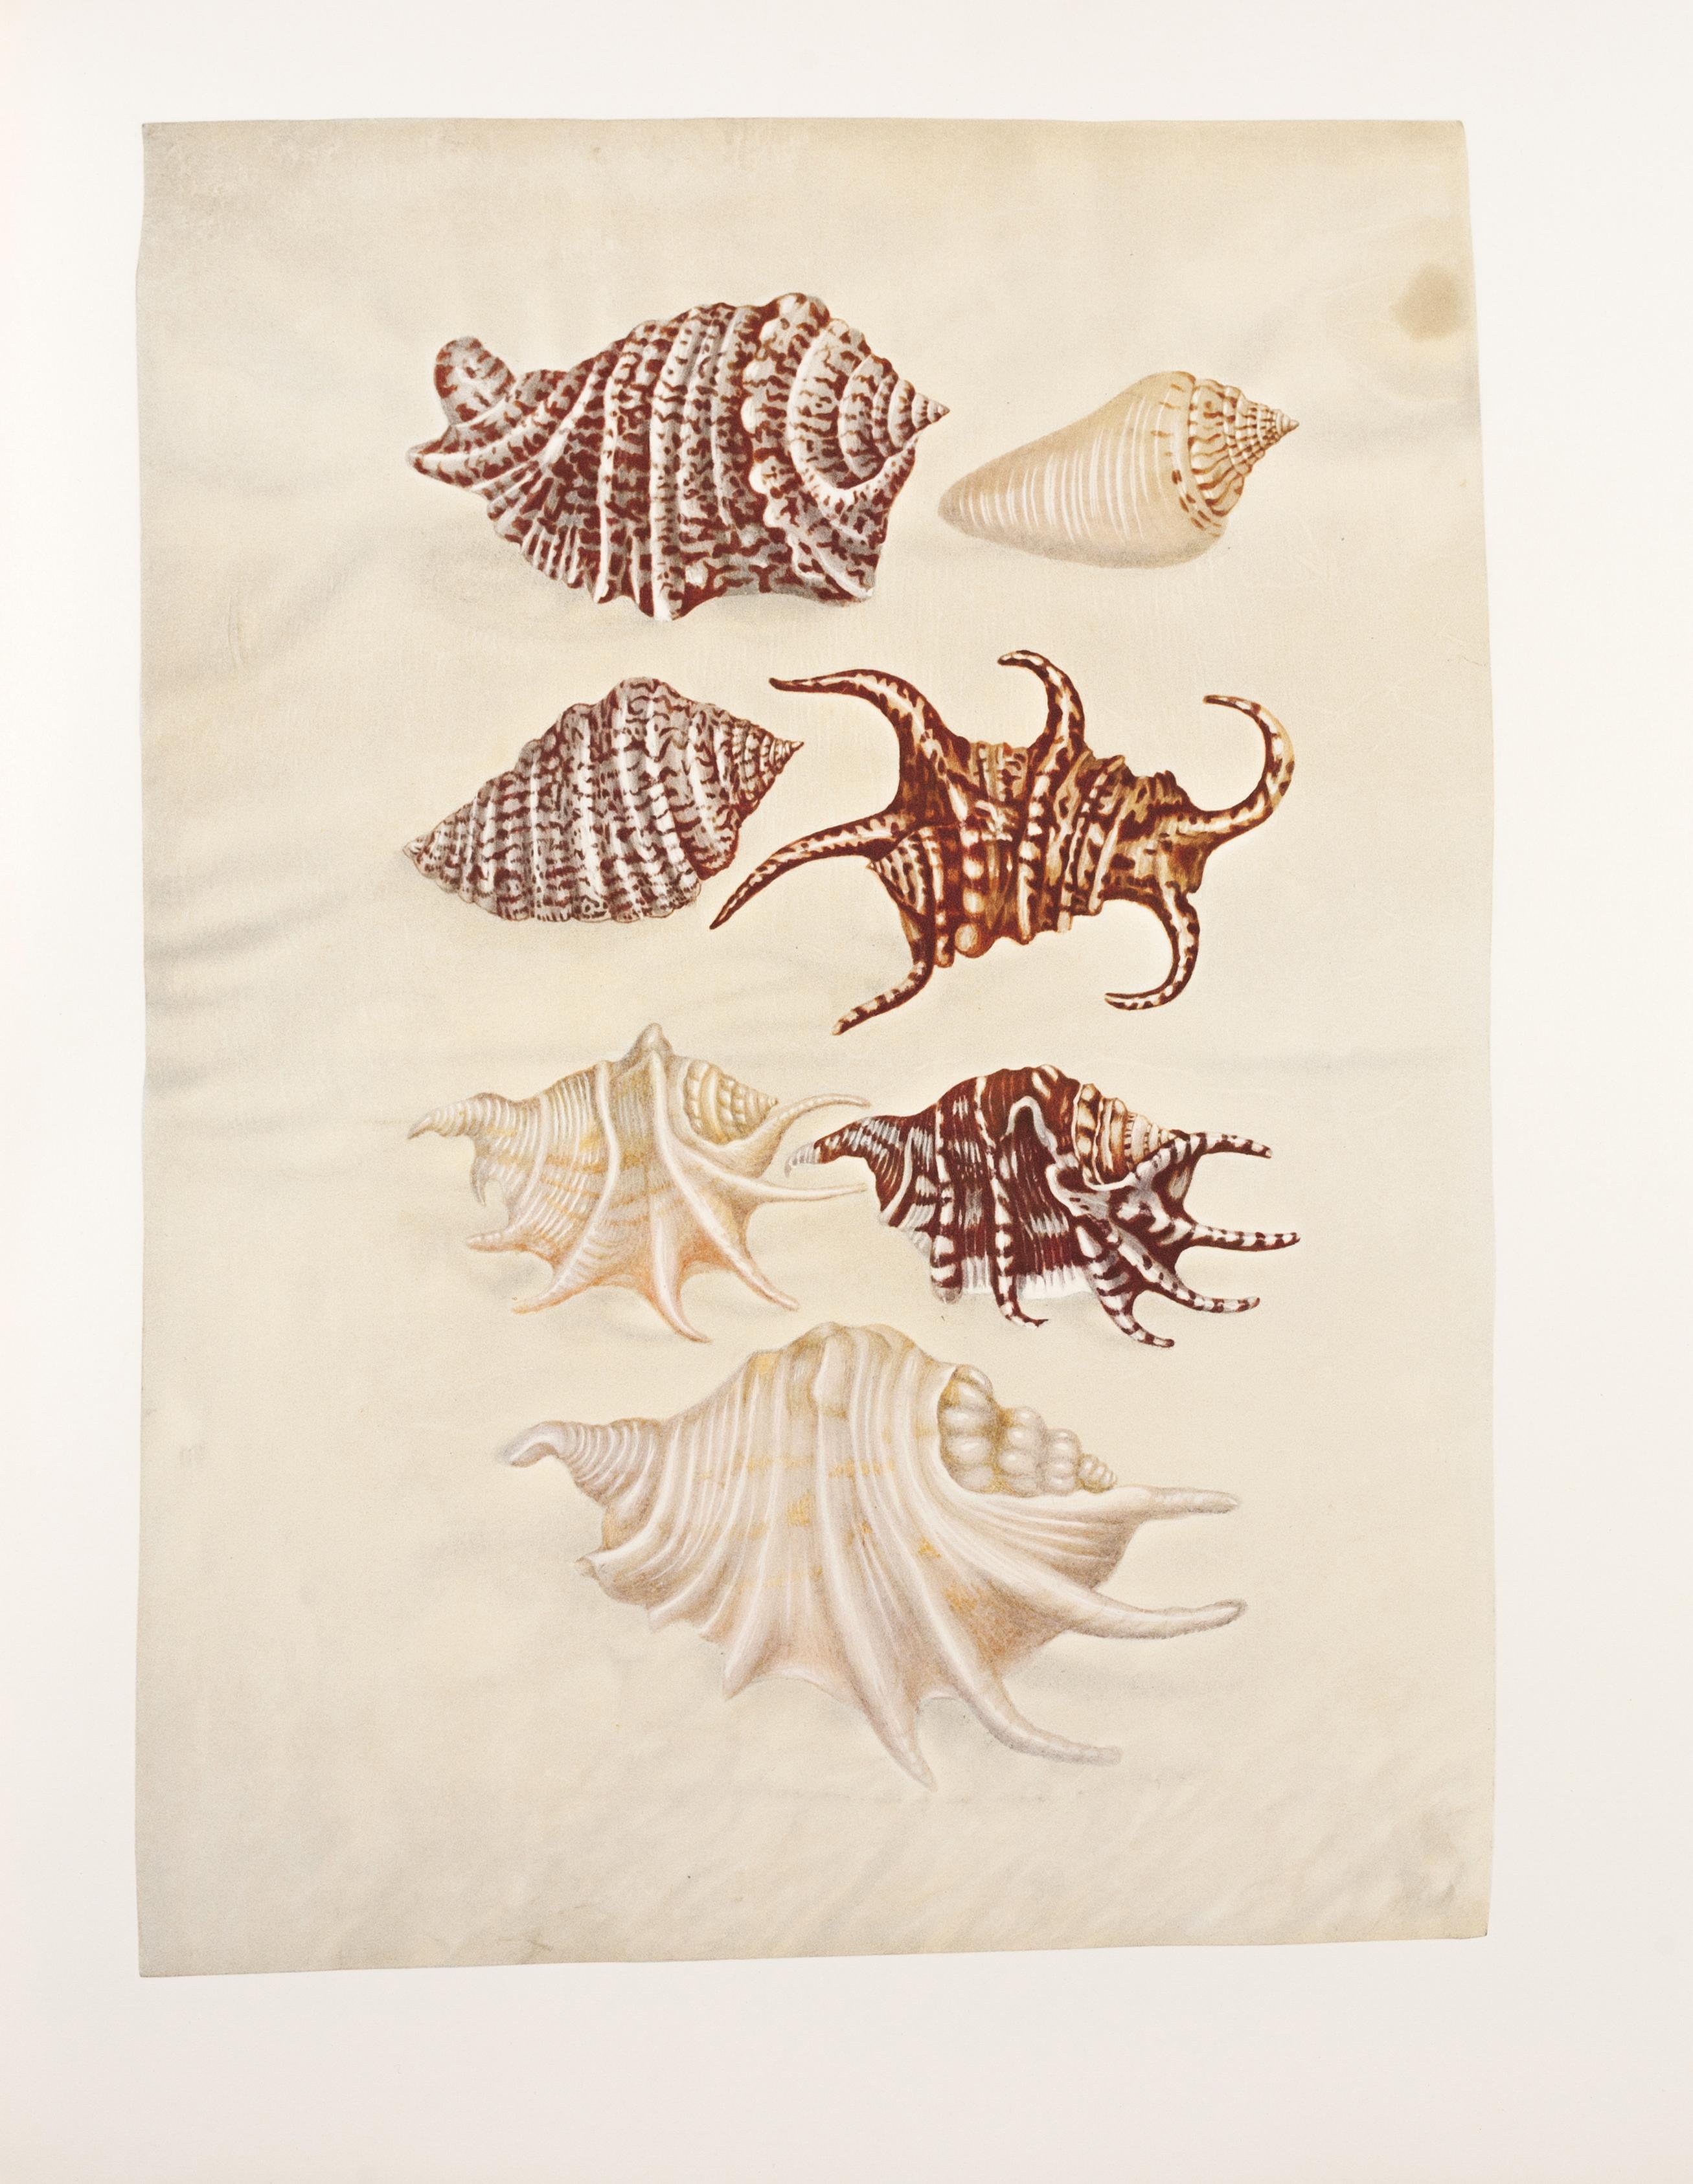 19. Spider conches - Print by Maria Sybilla Merian